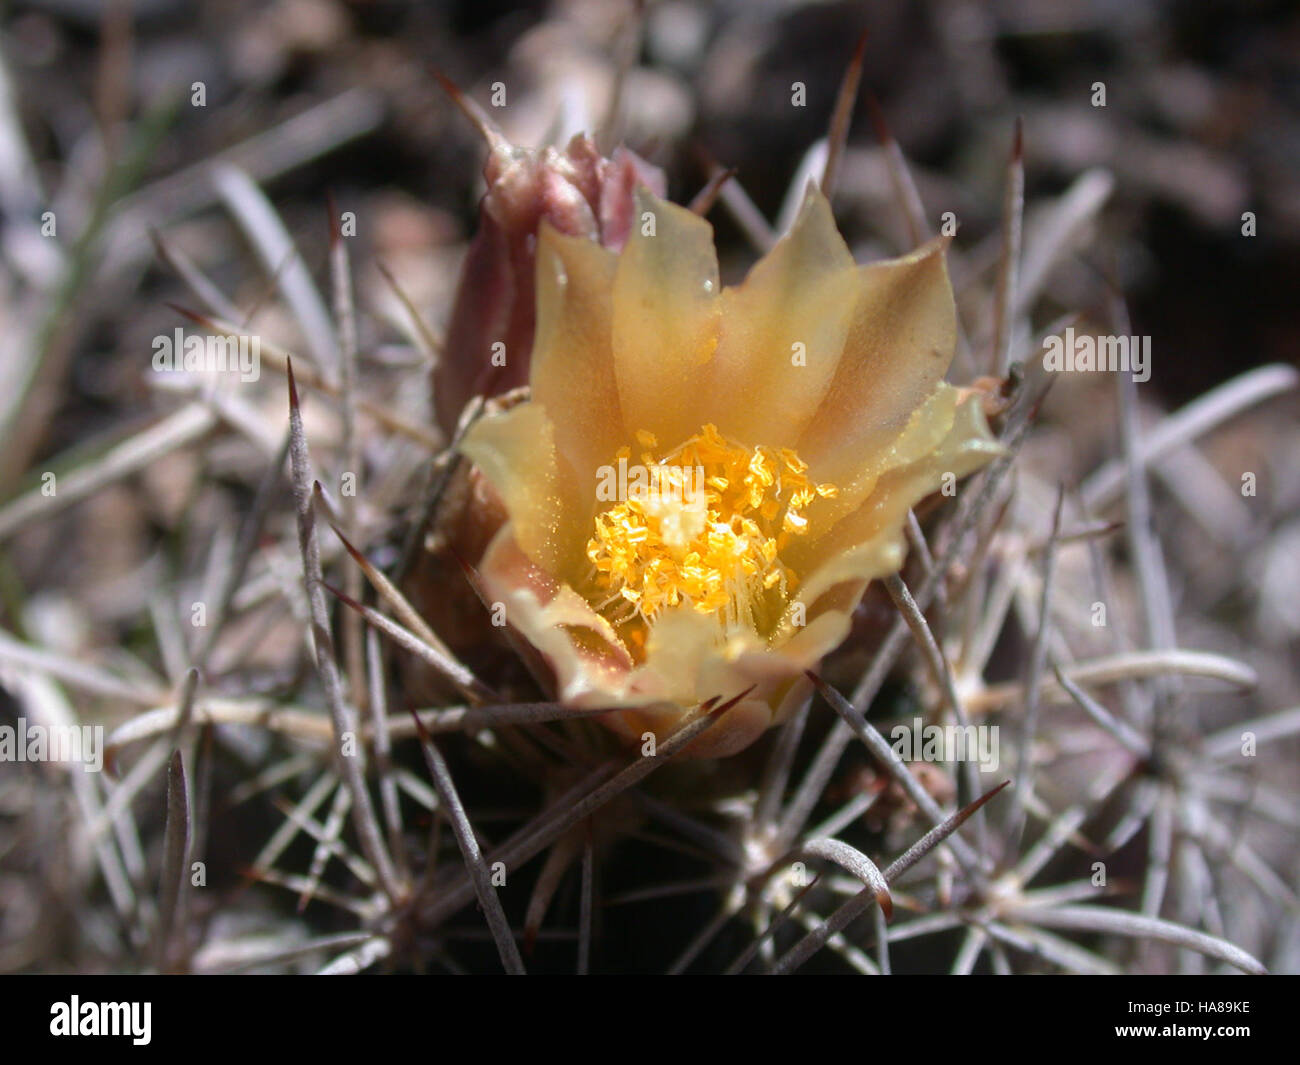 usfwsendsp 5863730477 Endangered Tobusch fishhook cactus (Ancistrocactus tobuschii) Stock Photo